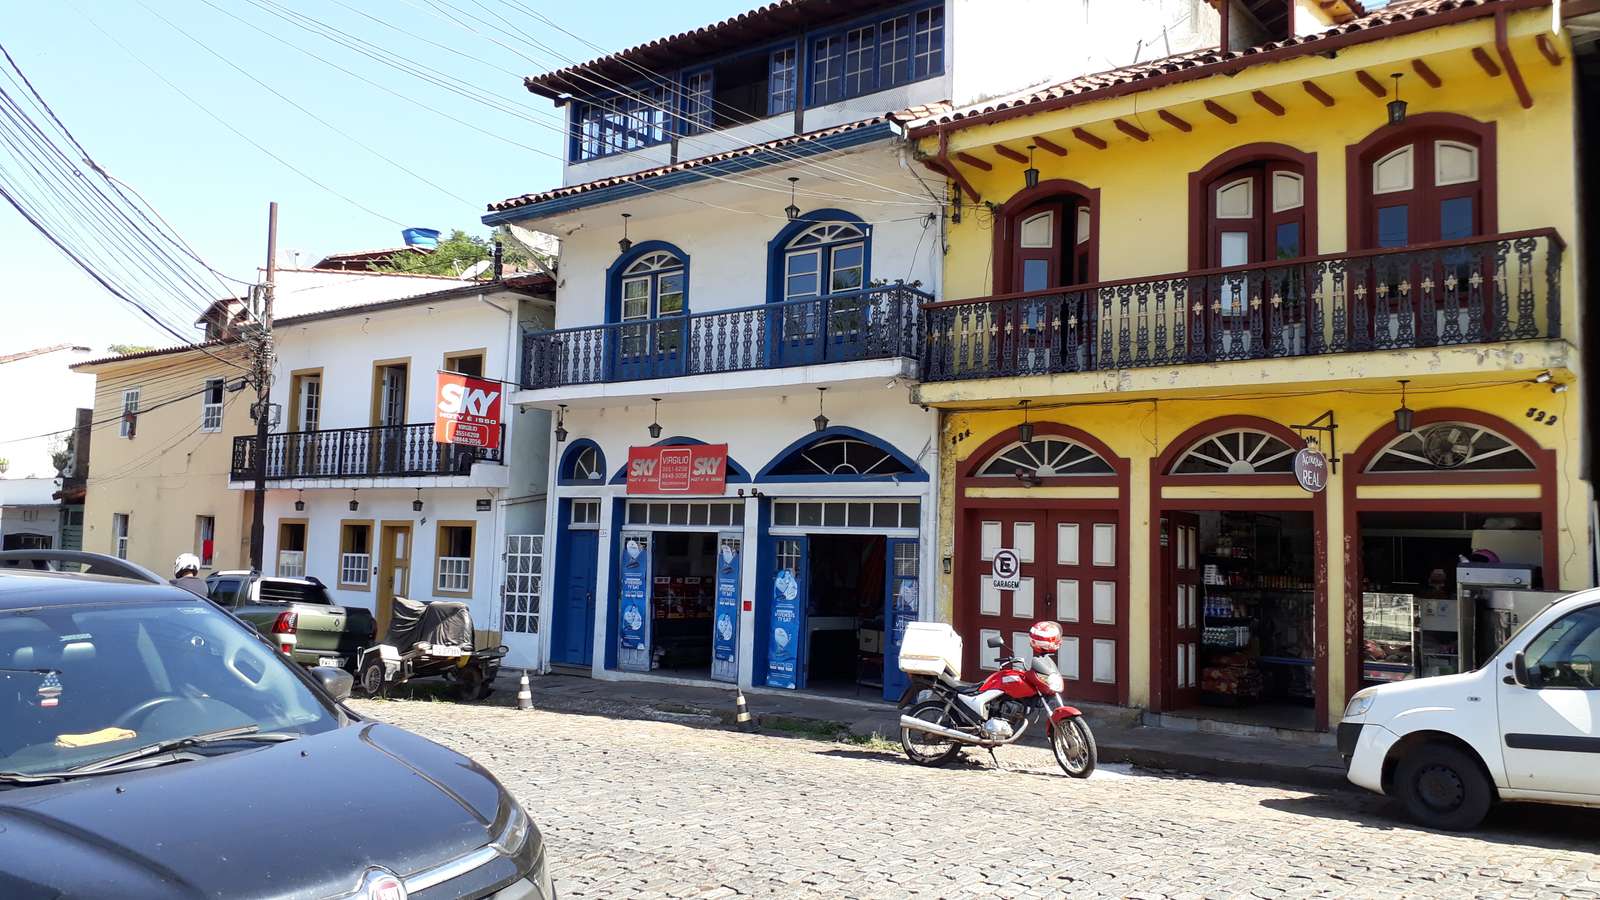 Huizen in Ouro Preto - MG - Brazilië online puzzel